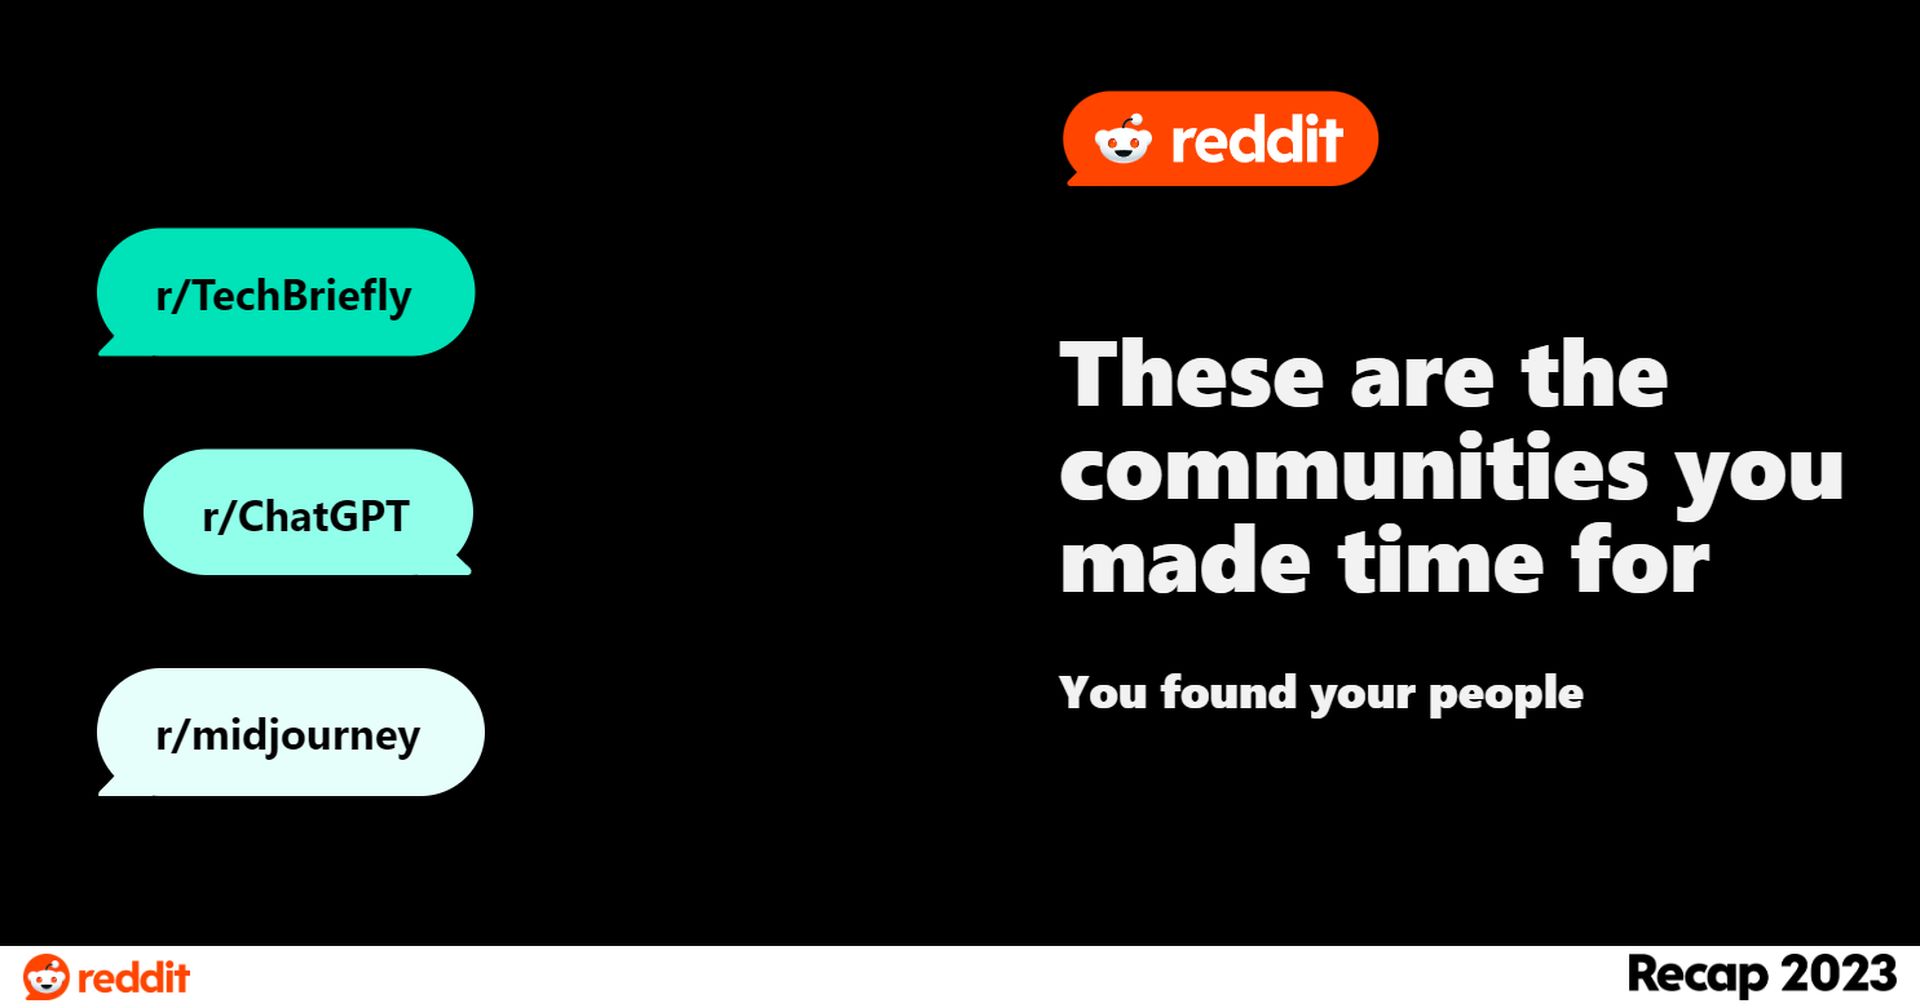 Reddit Recap 2023 کو 4 آسان مراحل میں کیسے حاصل کیا جائے! منفرد بصیرت، کمیونٹی کی جھلکیاں، اور یادگار لمحات کی نقاب کشائی کریں۔ ابھی دریافت کریں!